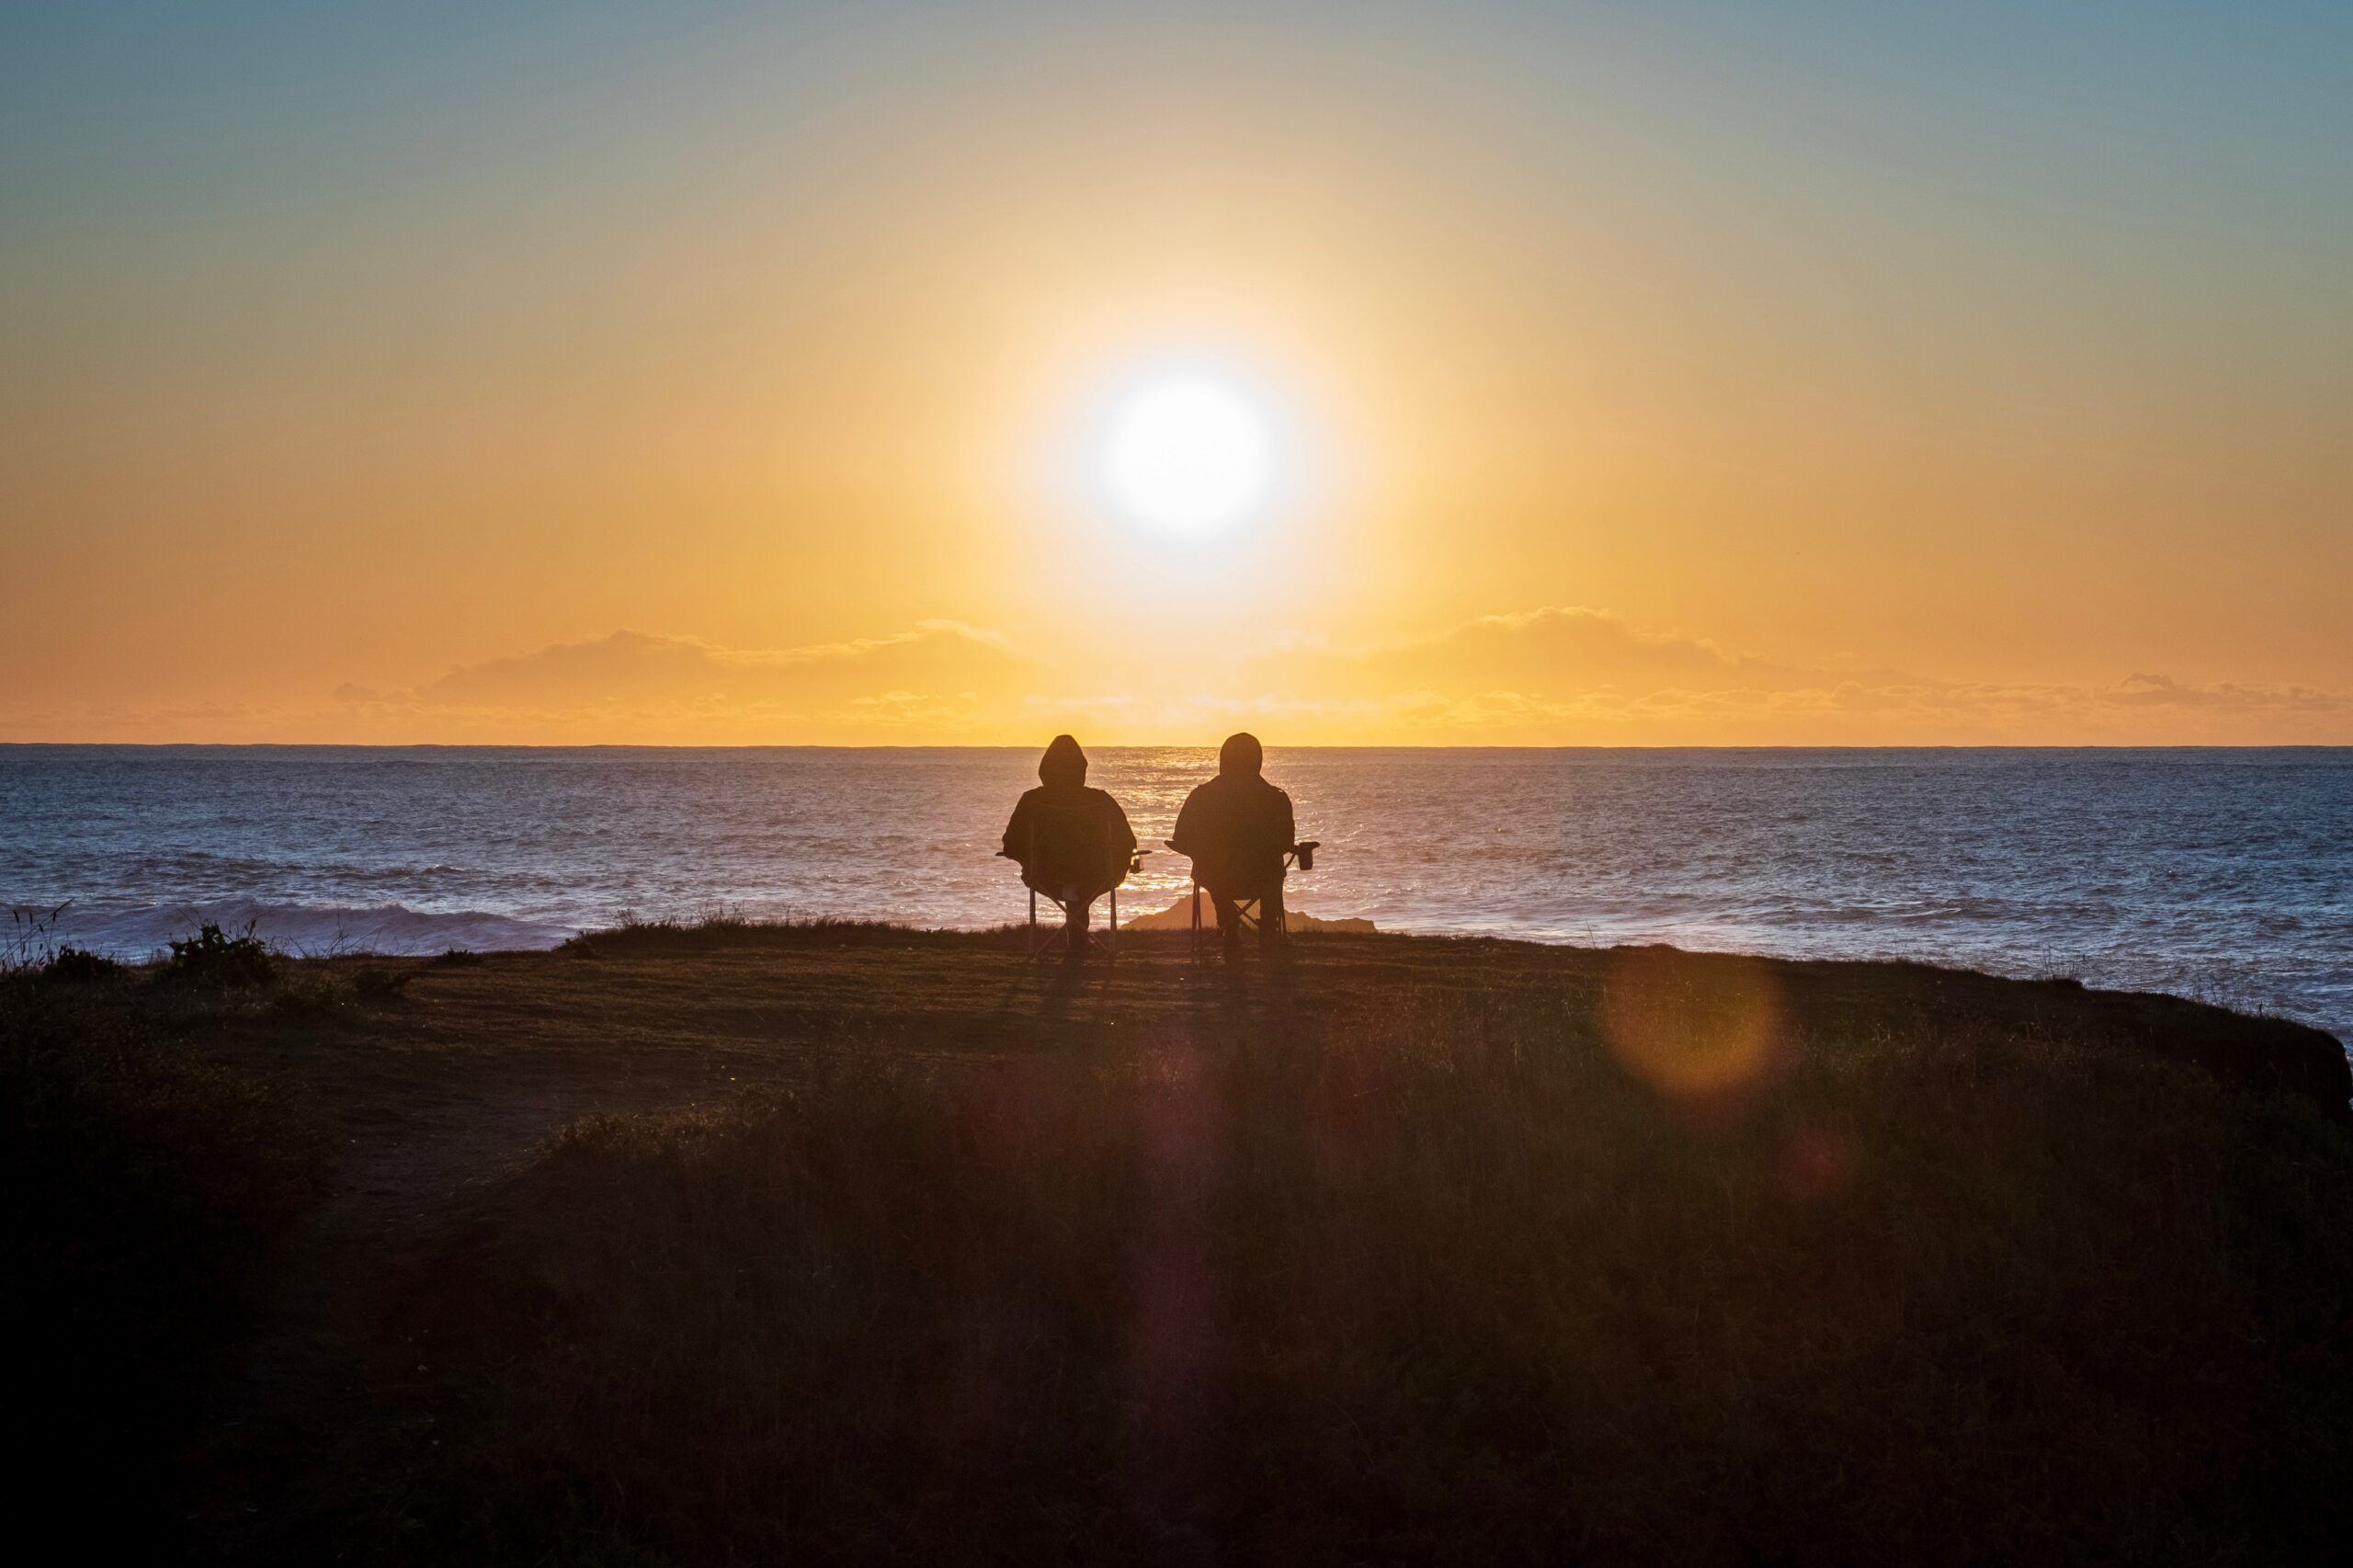 Couple enjoying retirement by watching the sunset.